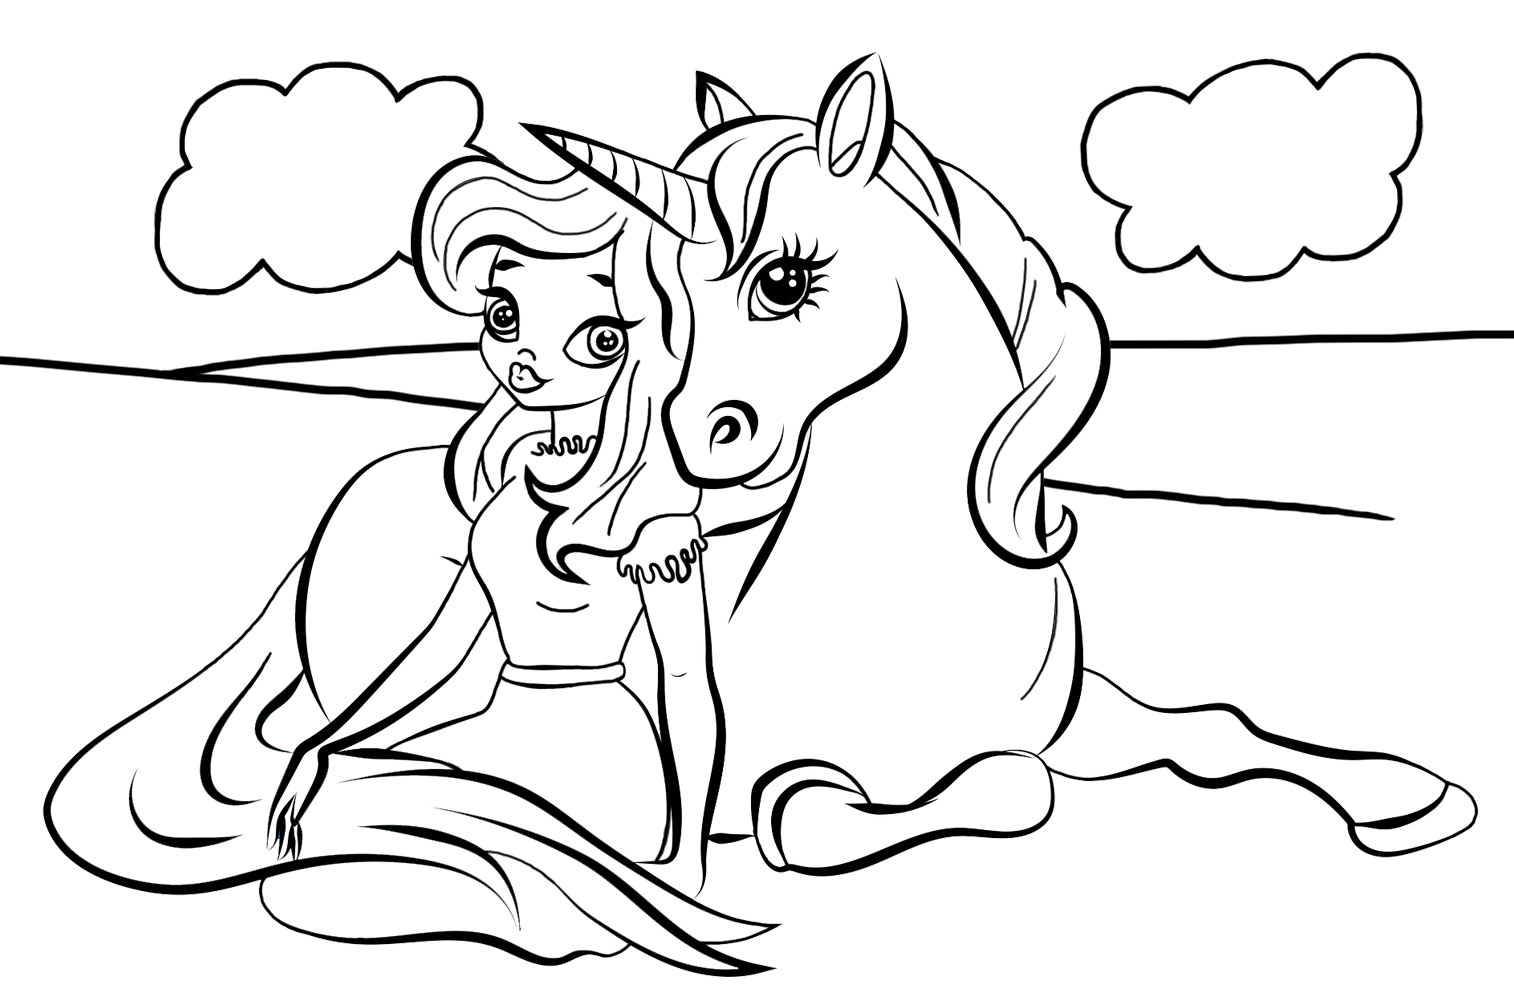 A kids colouring page of a princess and a unicorn